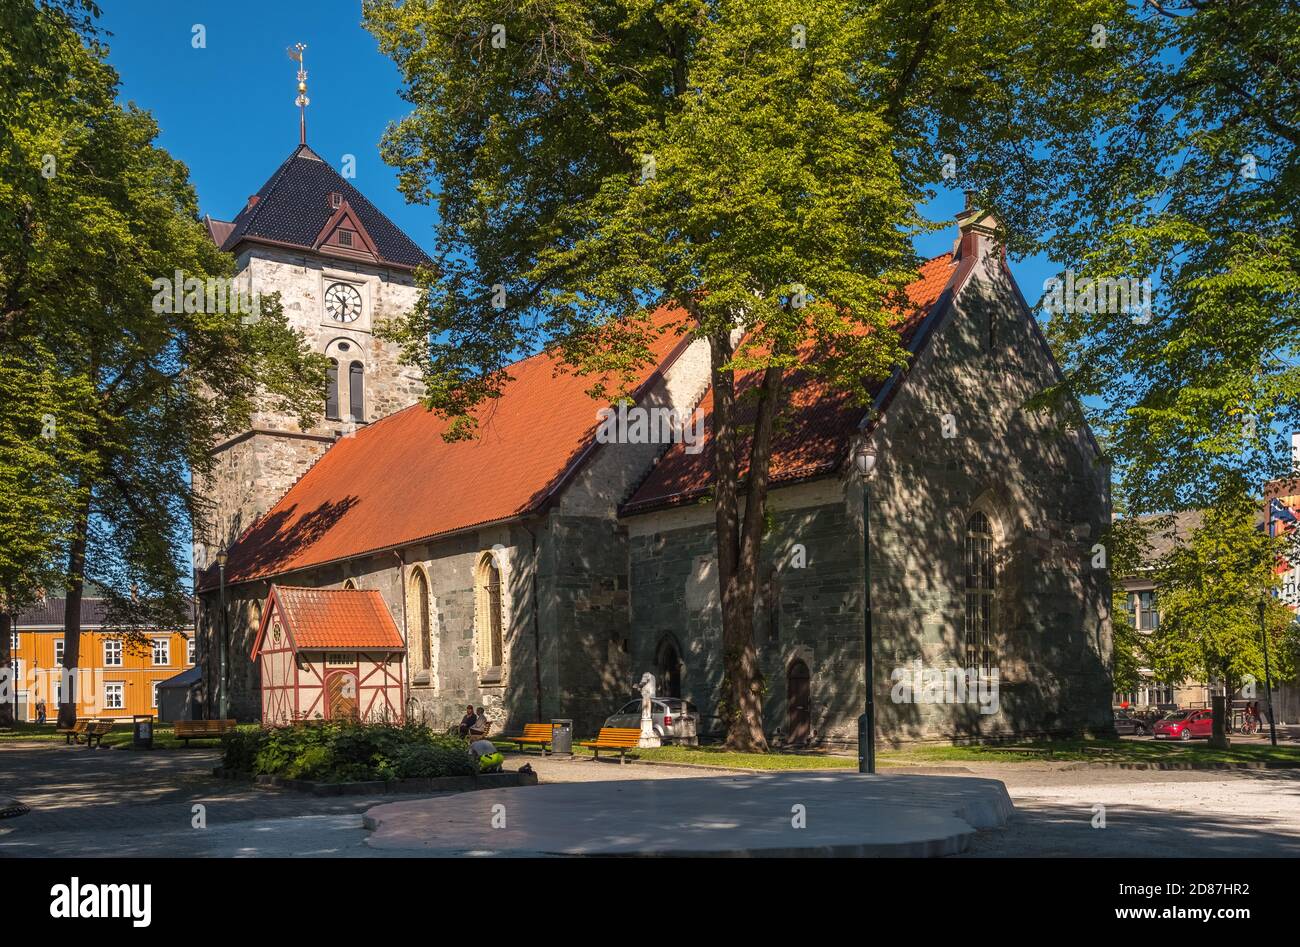 Vår Frue Kirke, Our Lady Church, Trondheim, Trøndelag, Norway, Scandinavia, Europe, adventure trip, place of worship, tourism, faith community, church Stock Photo